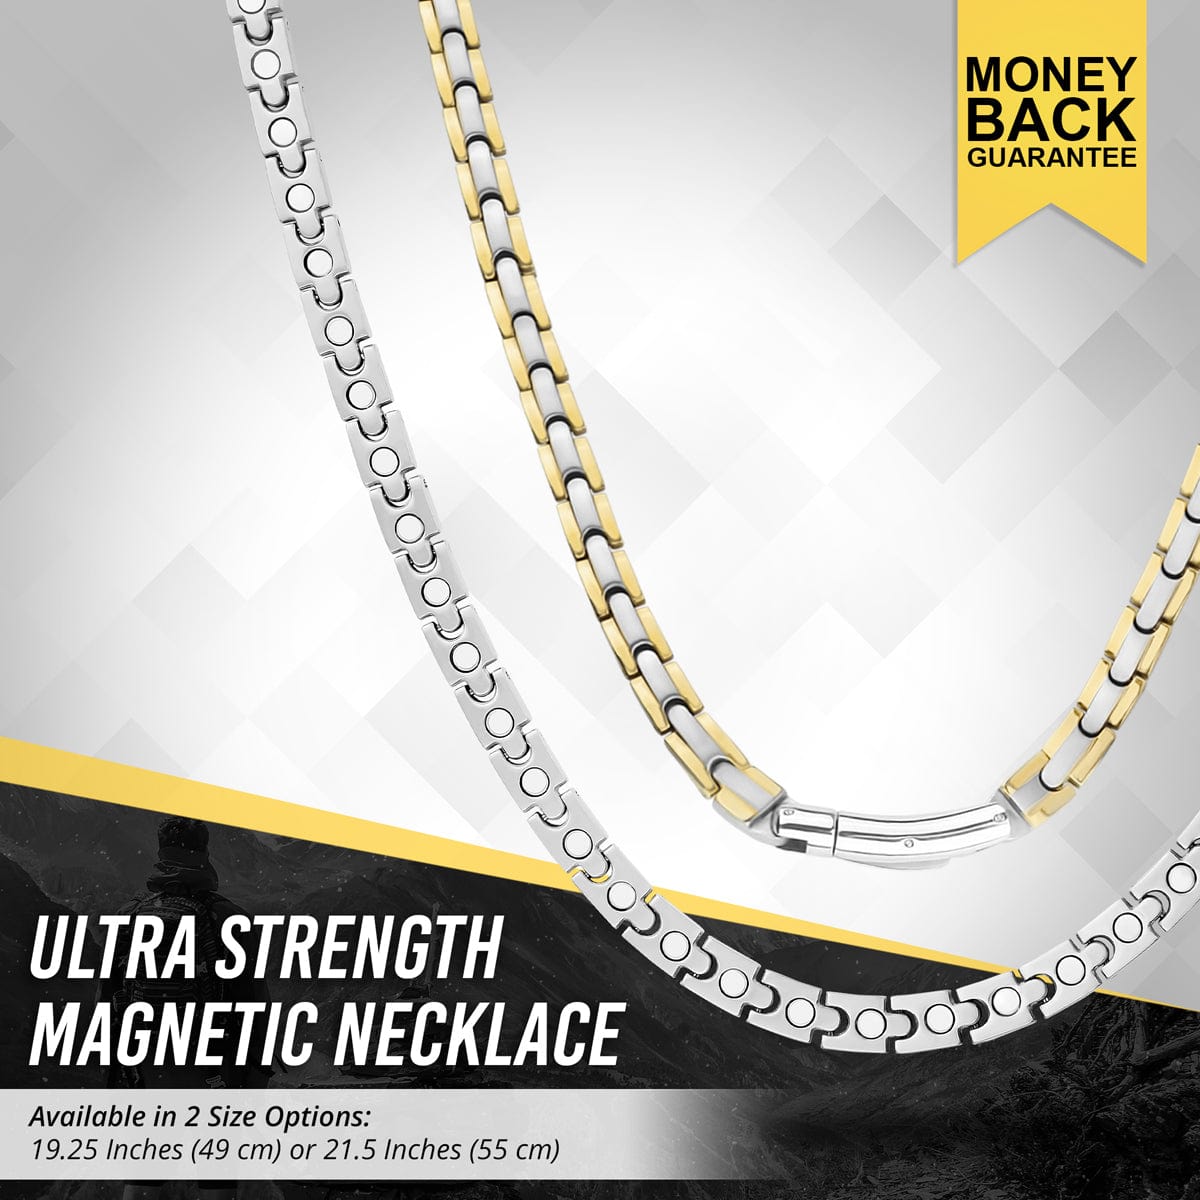 MagnetRX Ultra Strength Magnetic Necklace for Men - Silver Titanium